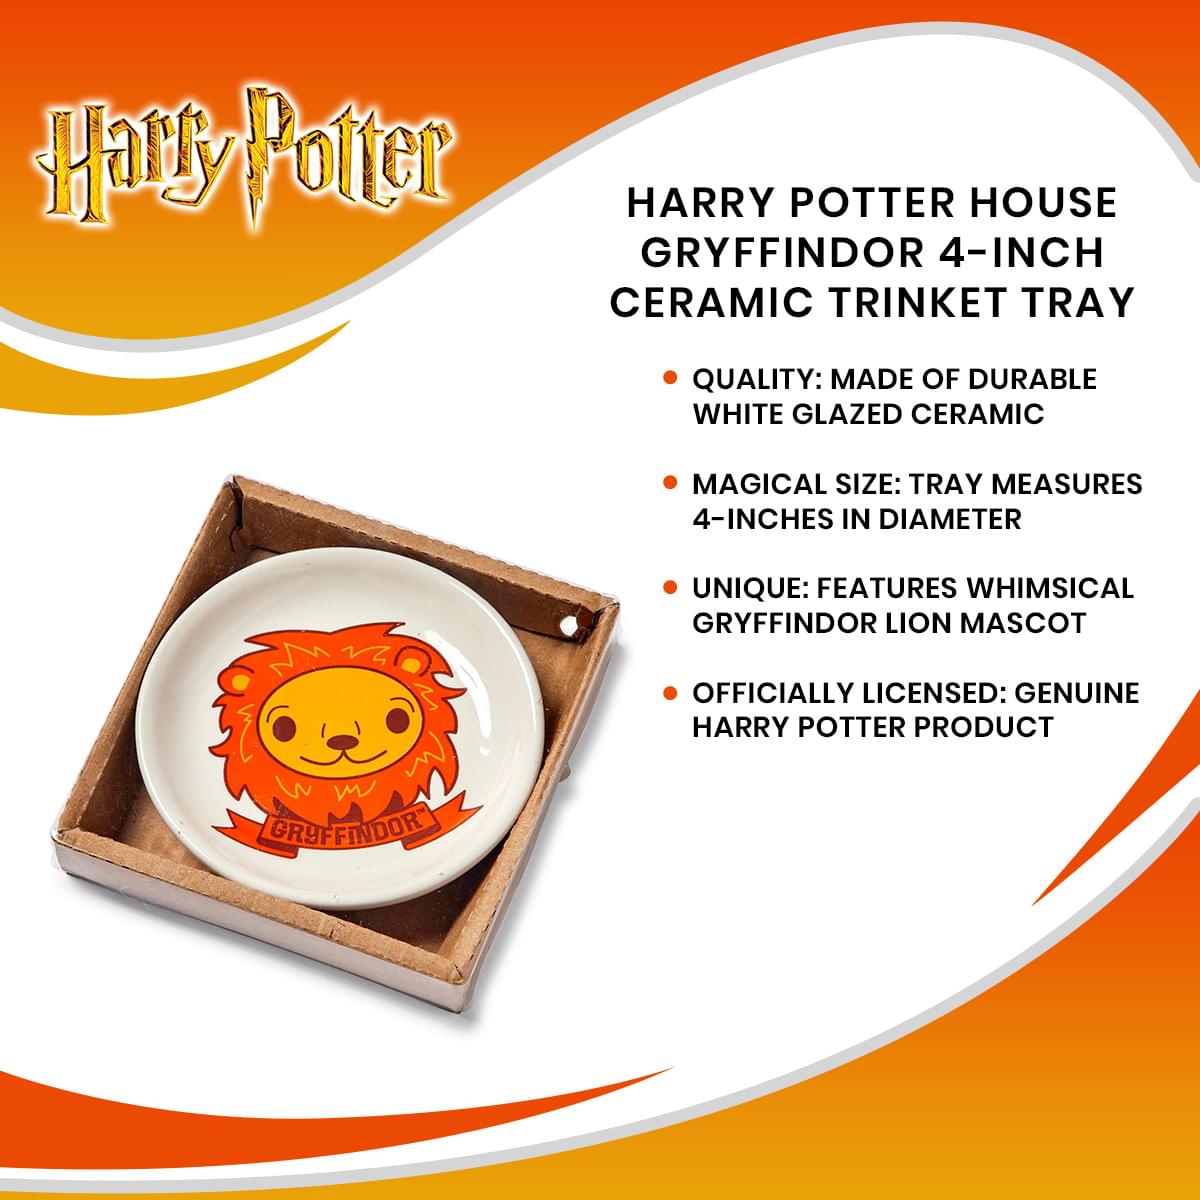 Harry Potter House Gryffindor 4-Inch Ceramic Trinket Tray